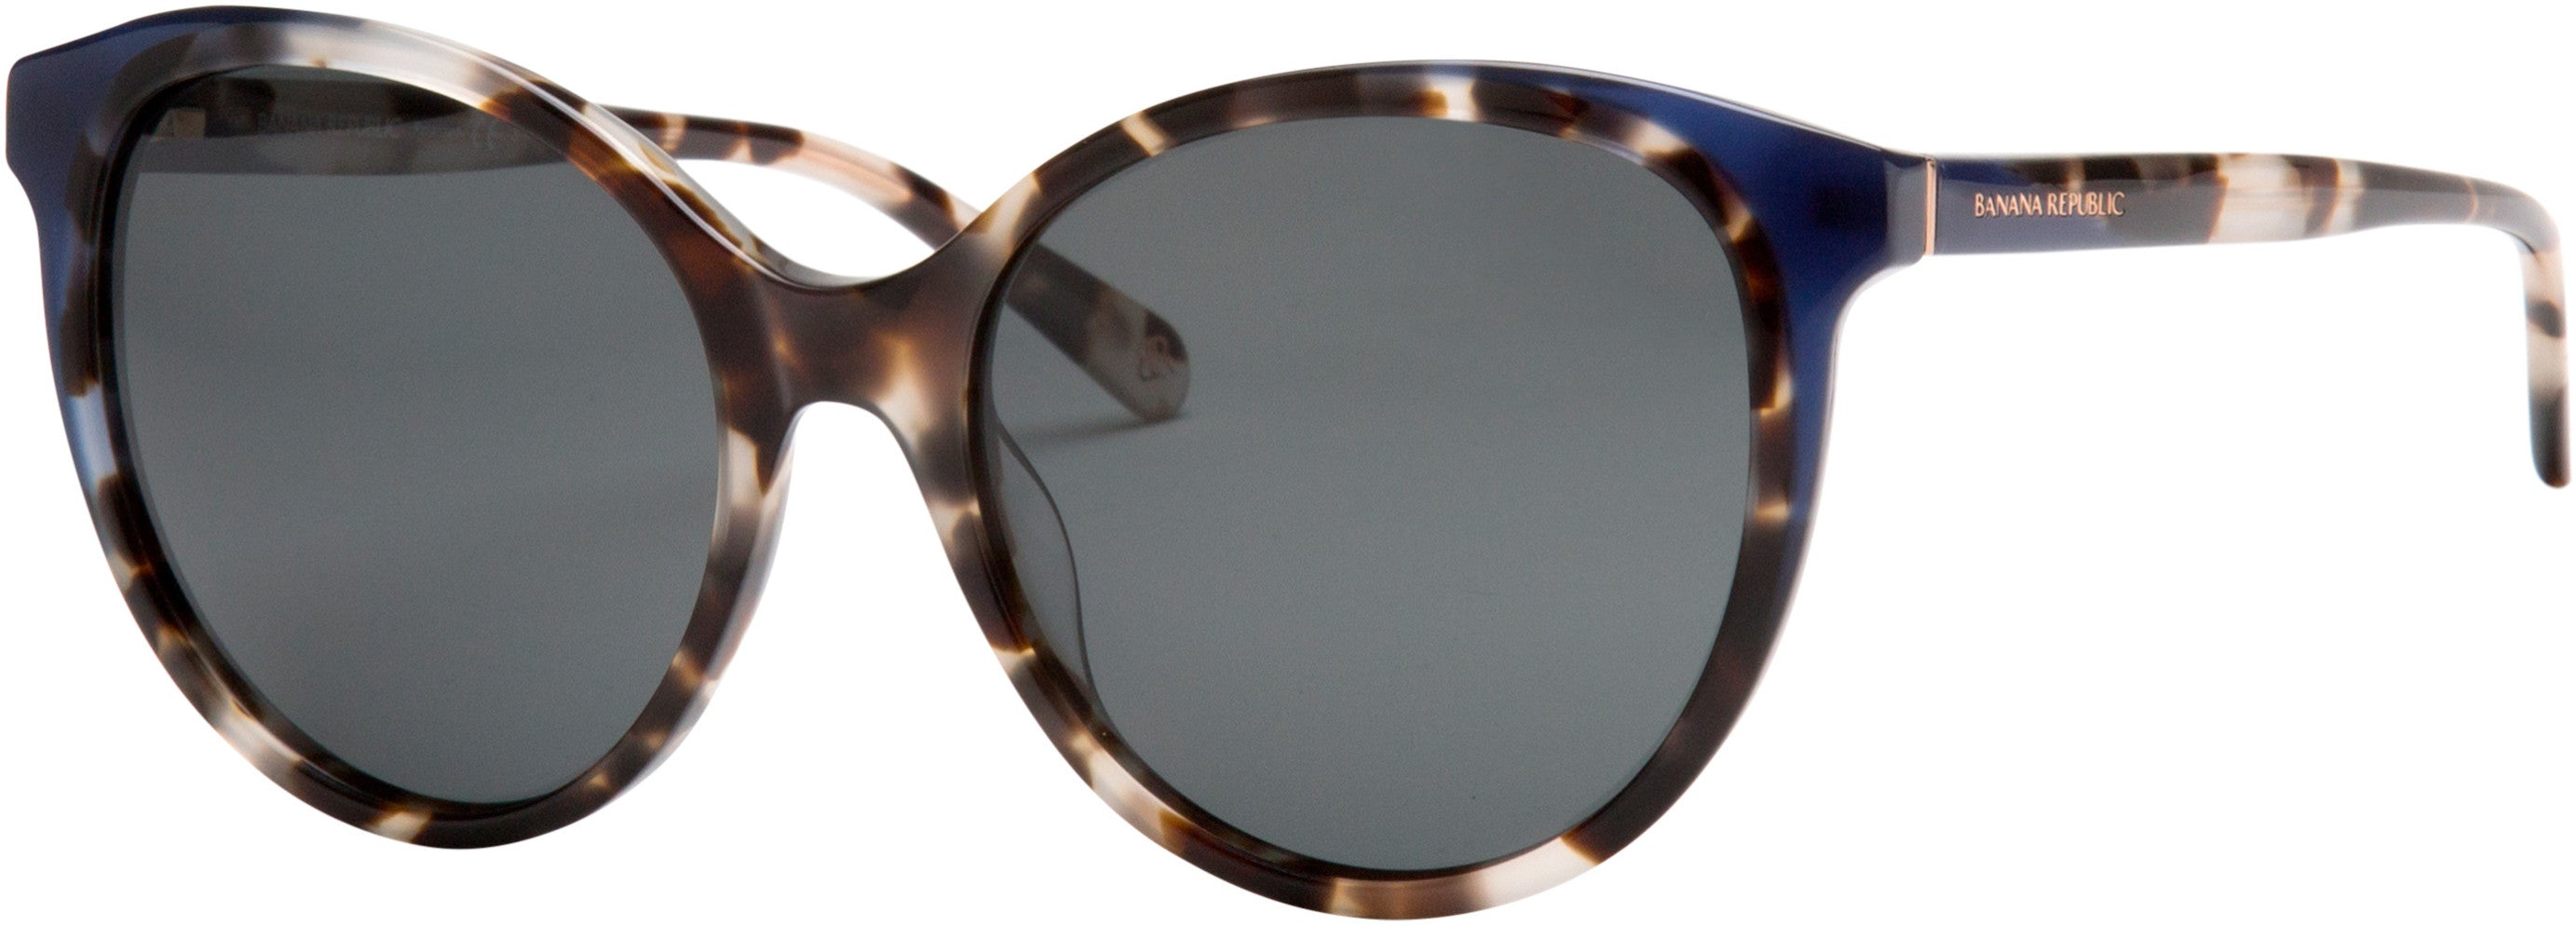 Banana Republic Deena/S Oval Modified Sunglasses 0TCB-0TCB  White Bksptt (M9 Gray Pz)